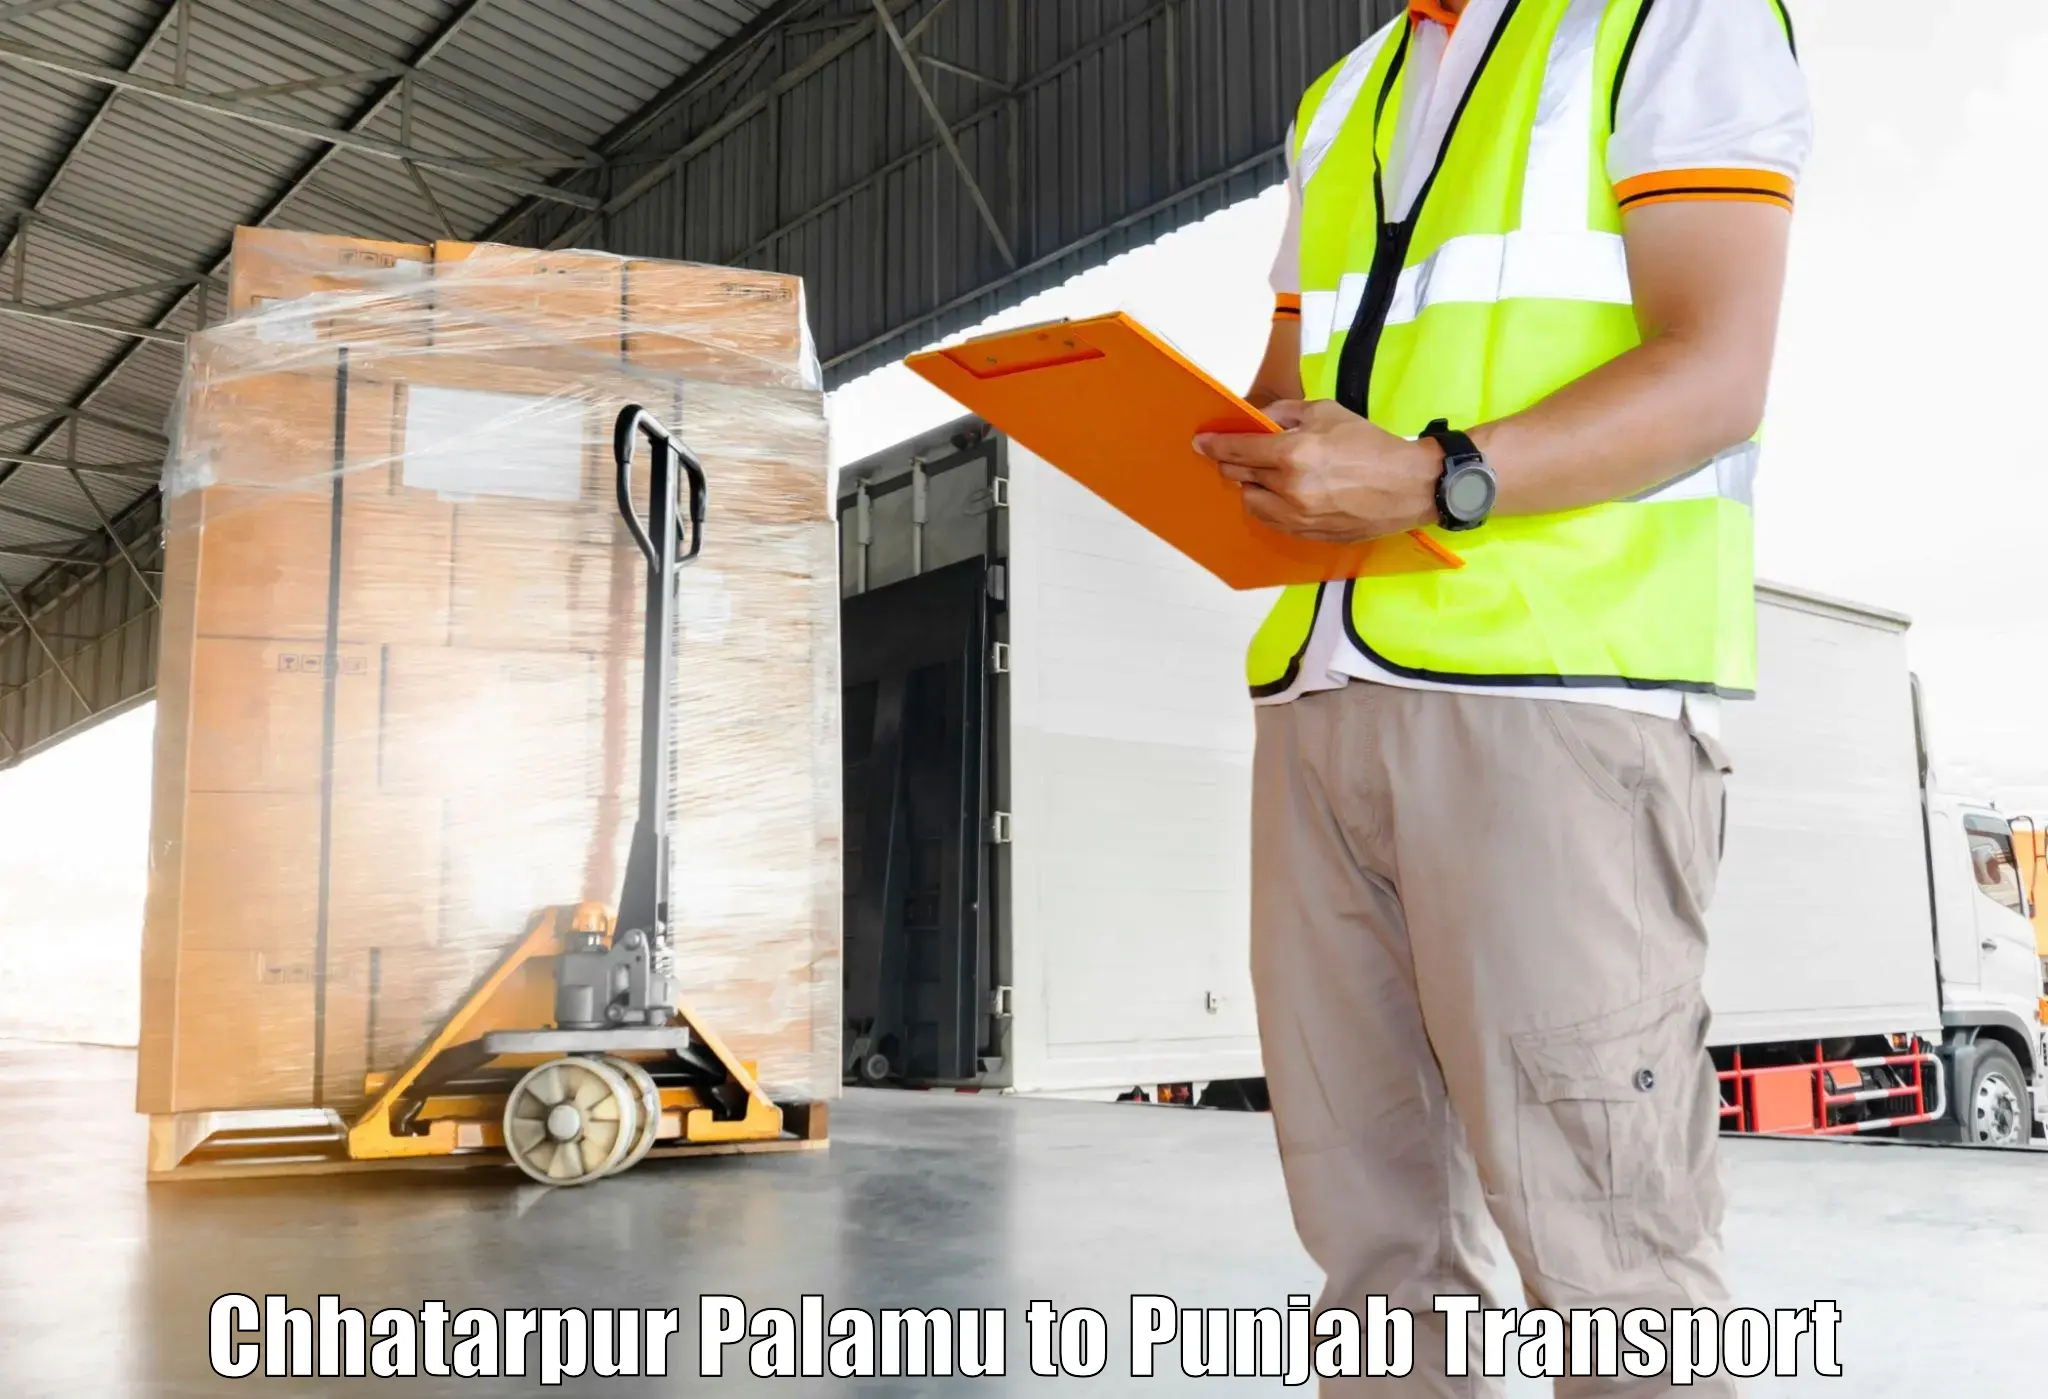 Delivery service Chhatarpur Palamu to Nakodar